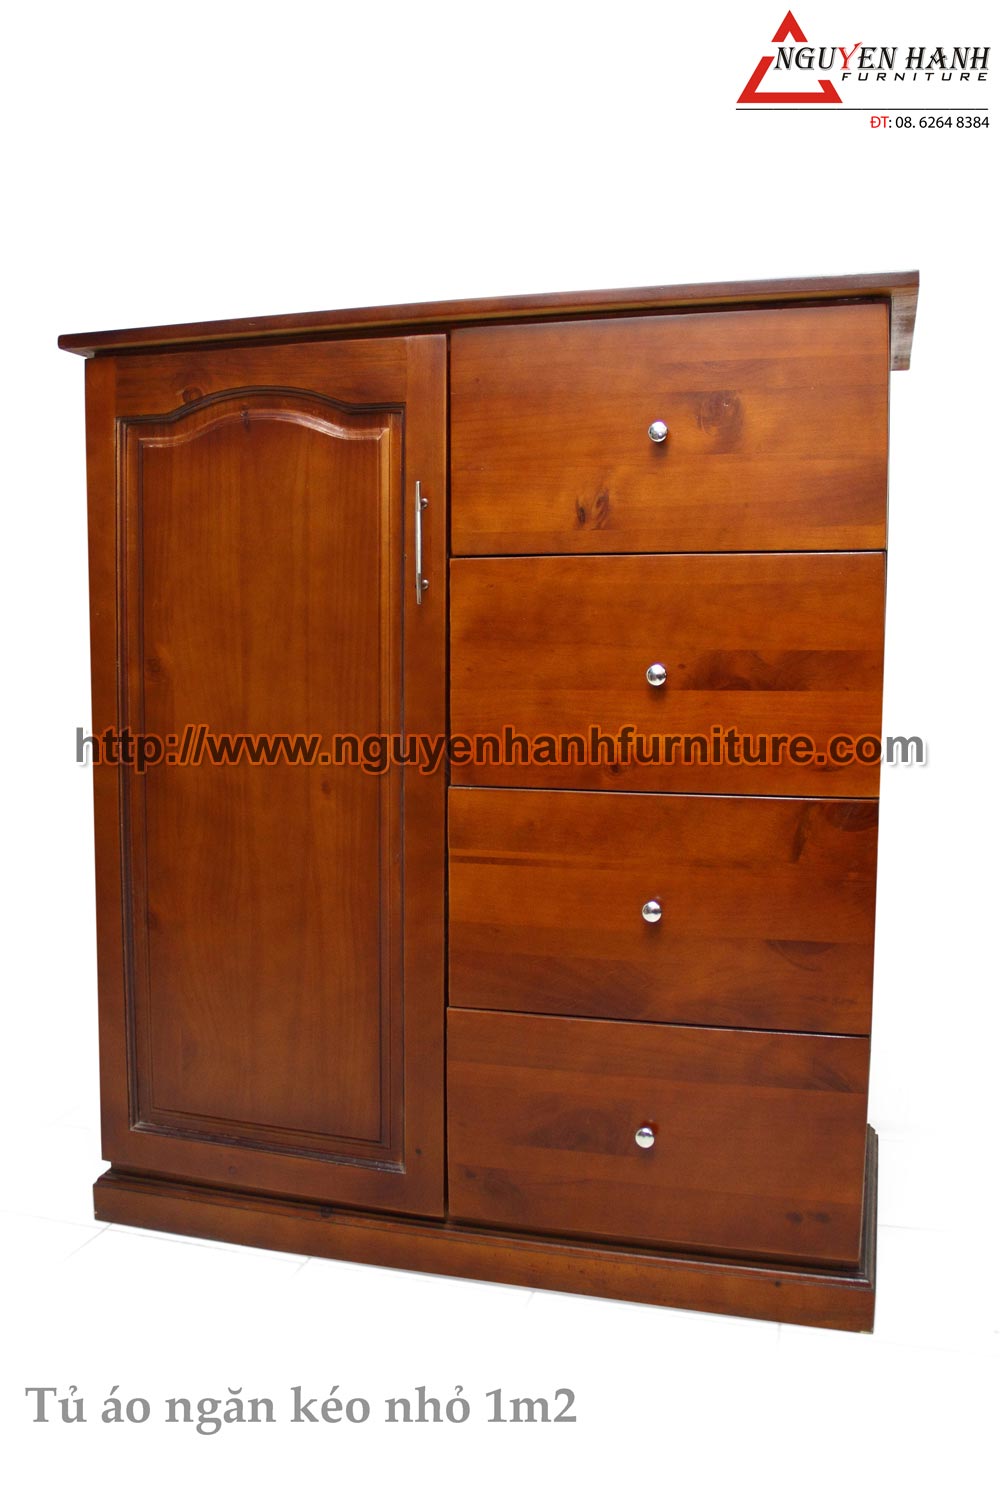 Name product: 1m2 Drawers Cabinet- Dimensions: 50 x 100 x 126cm - Description: Natural pine wood